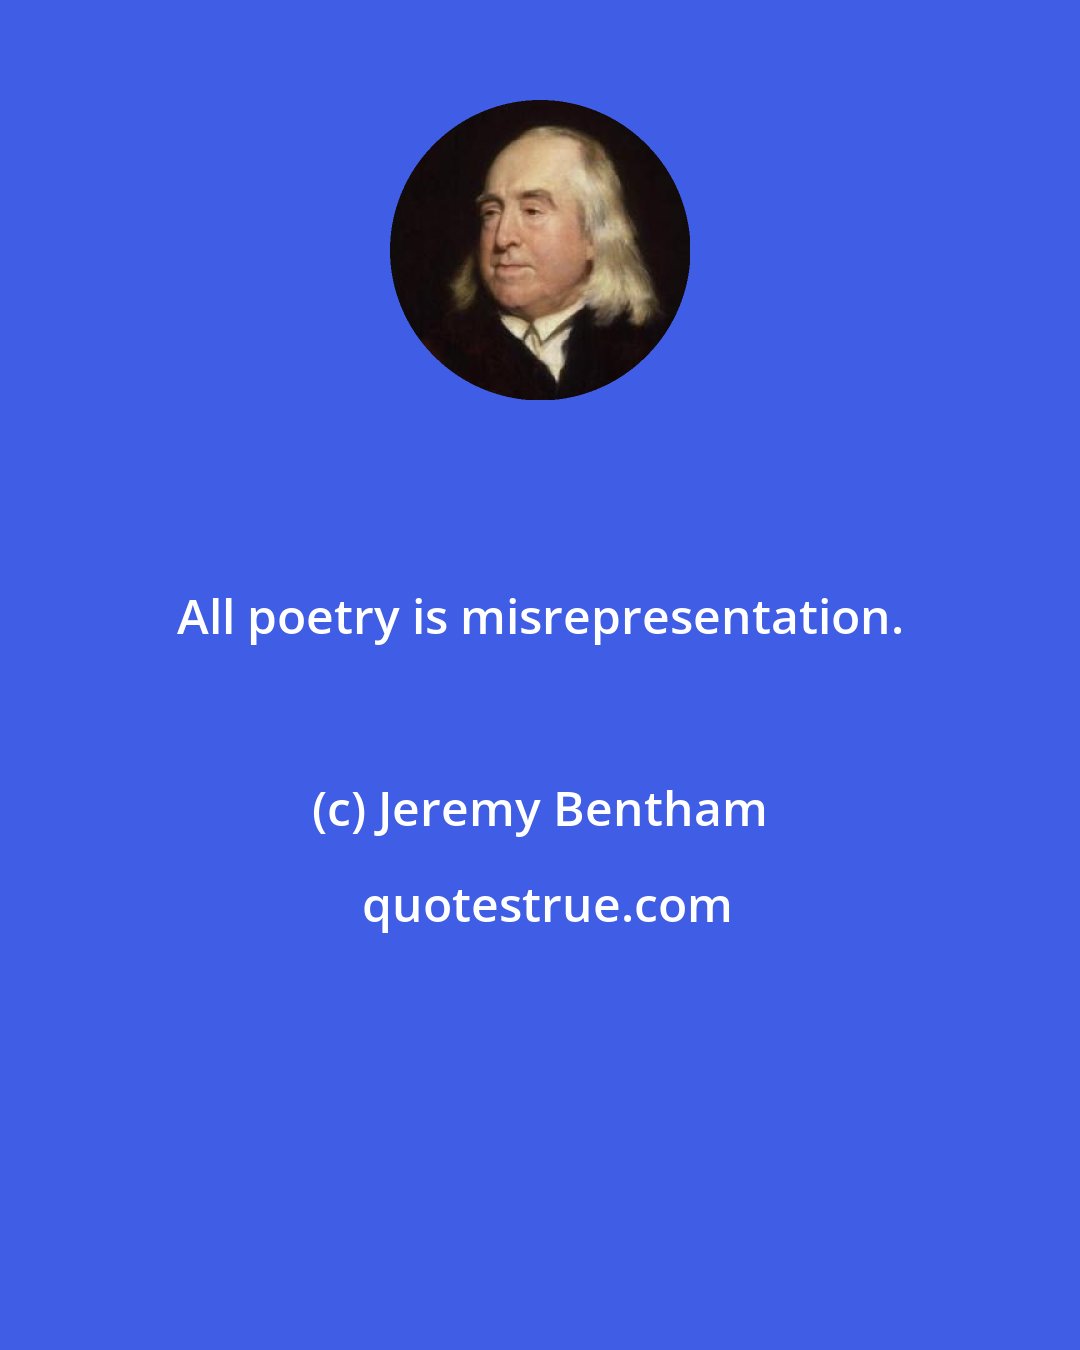 Jeremy Bentham: All poetry is misrepresentation.